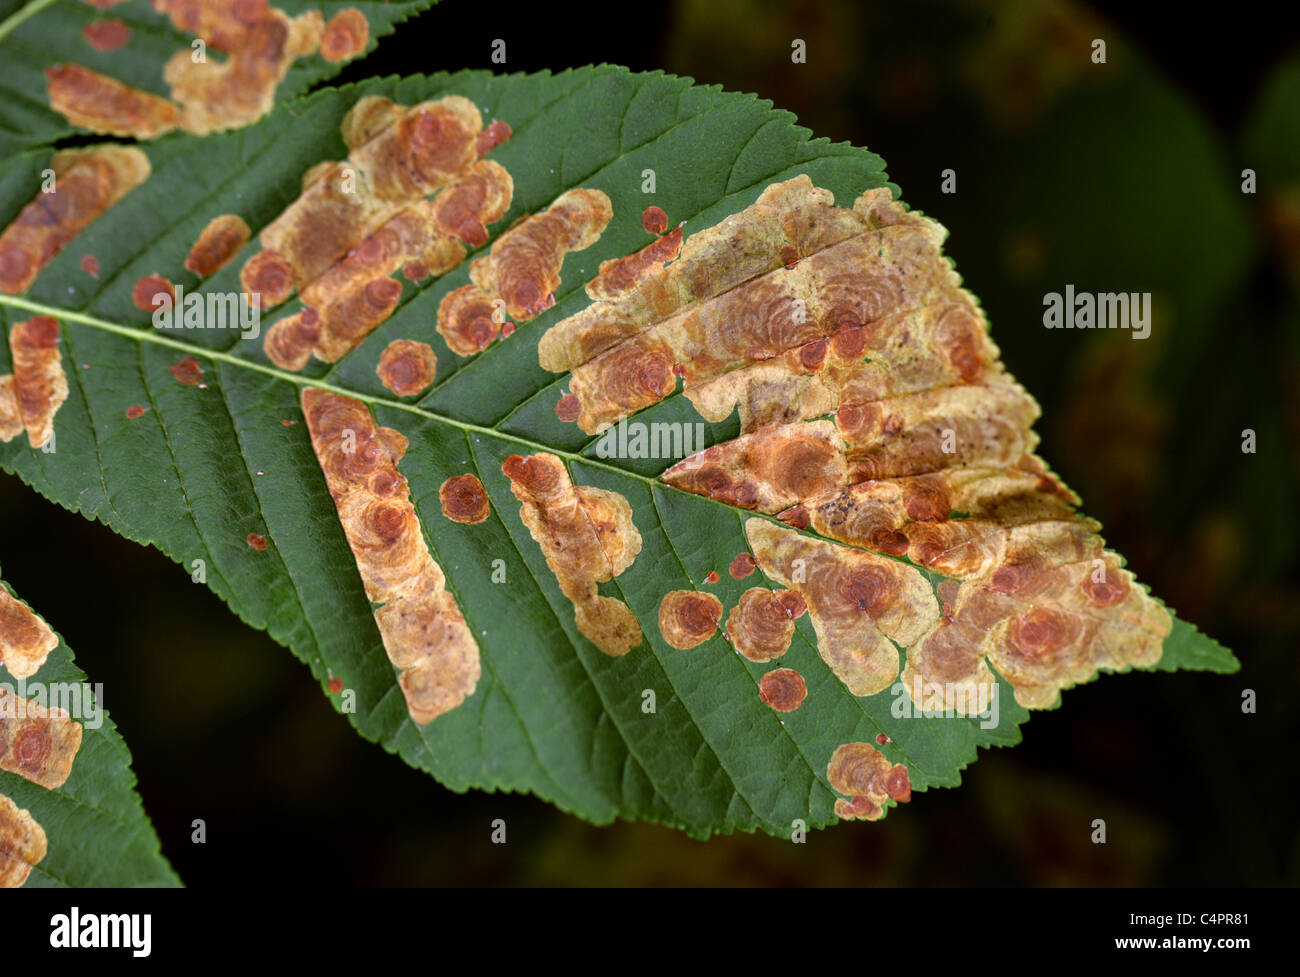 Severe Infestation of Horse Chestnut Tree Leaves by Horse Chestnut Leaf Miner Moth Larva, Cameraria ohridella. Stock Photo